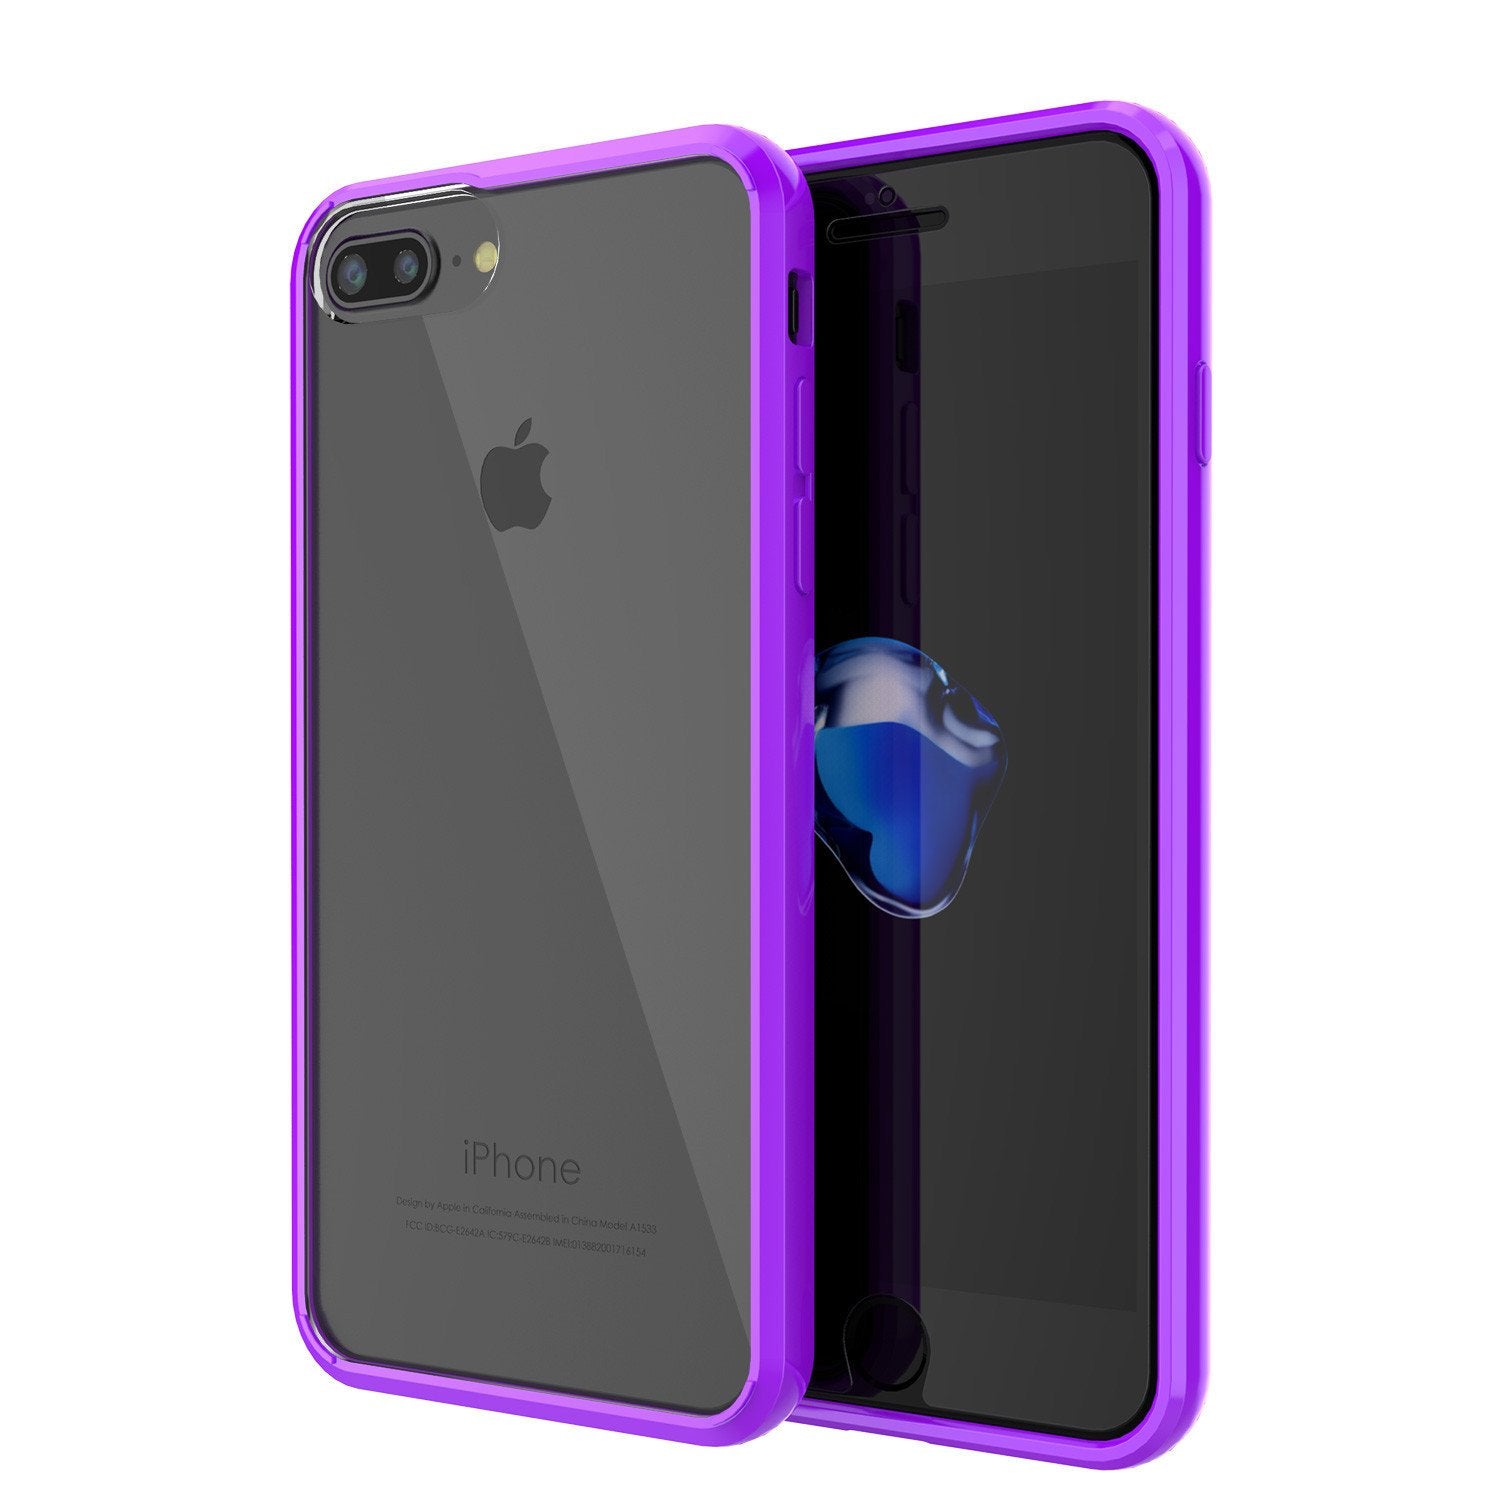 iPhone 7 Case Punkcase® LUCID 2.0 Puplre Series for Apple iPhone 7 Slim | Slick Frame Lifetime Warranty Exchange